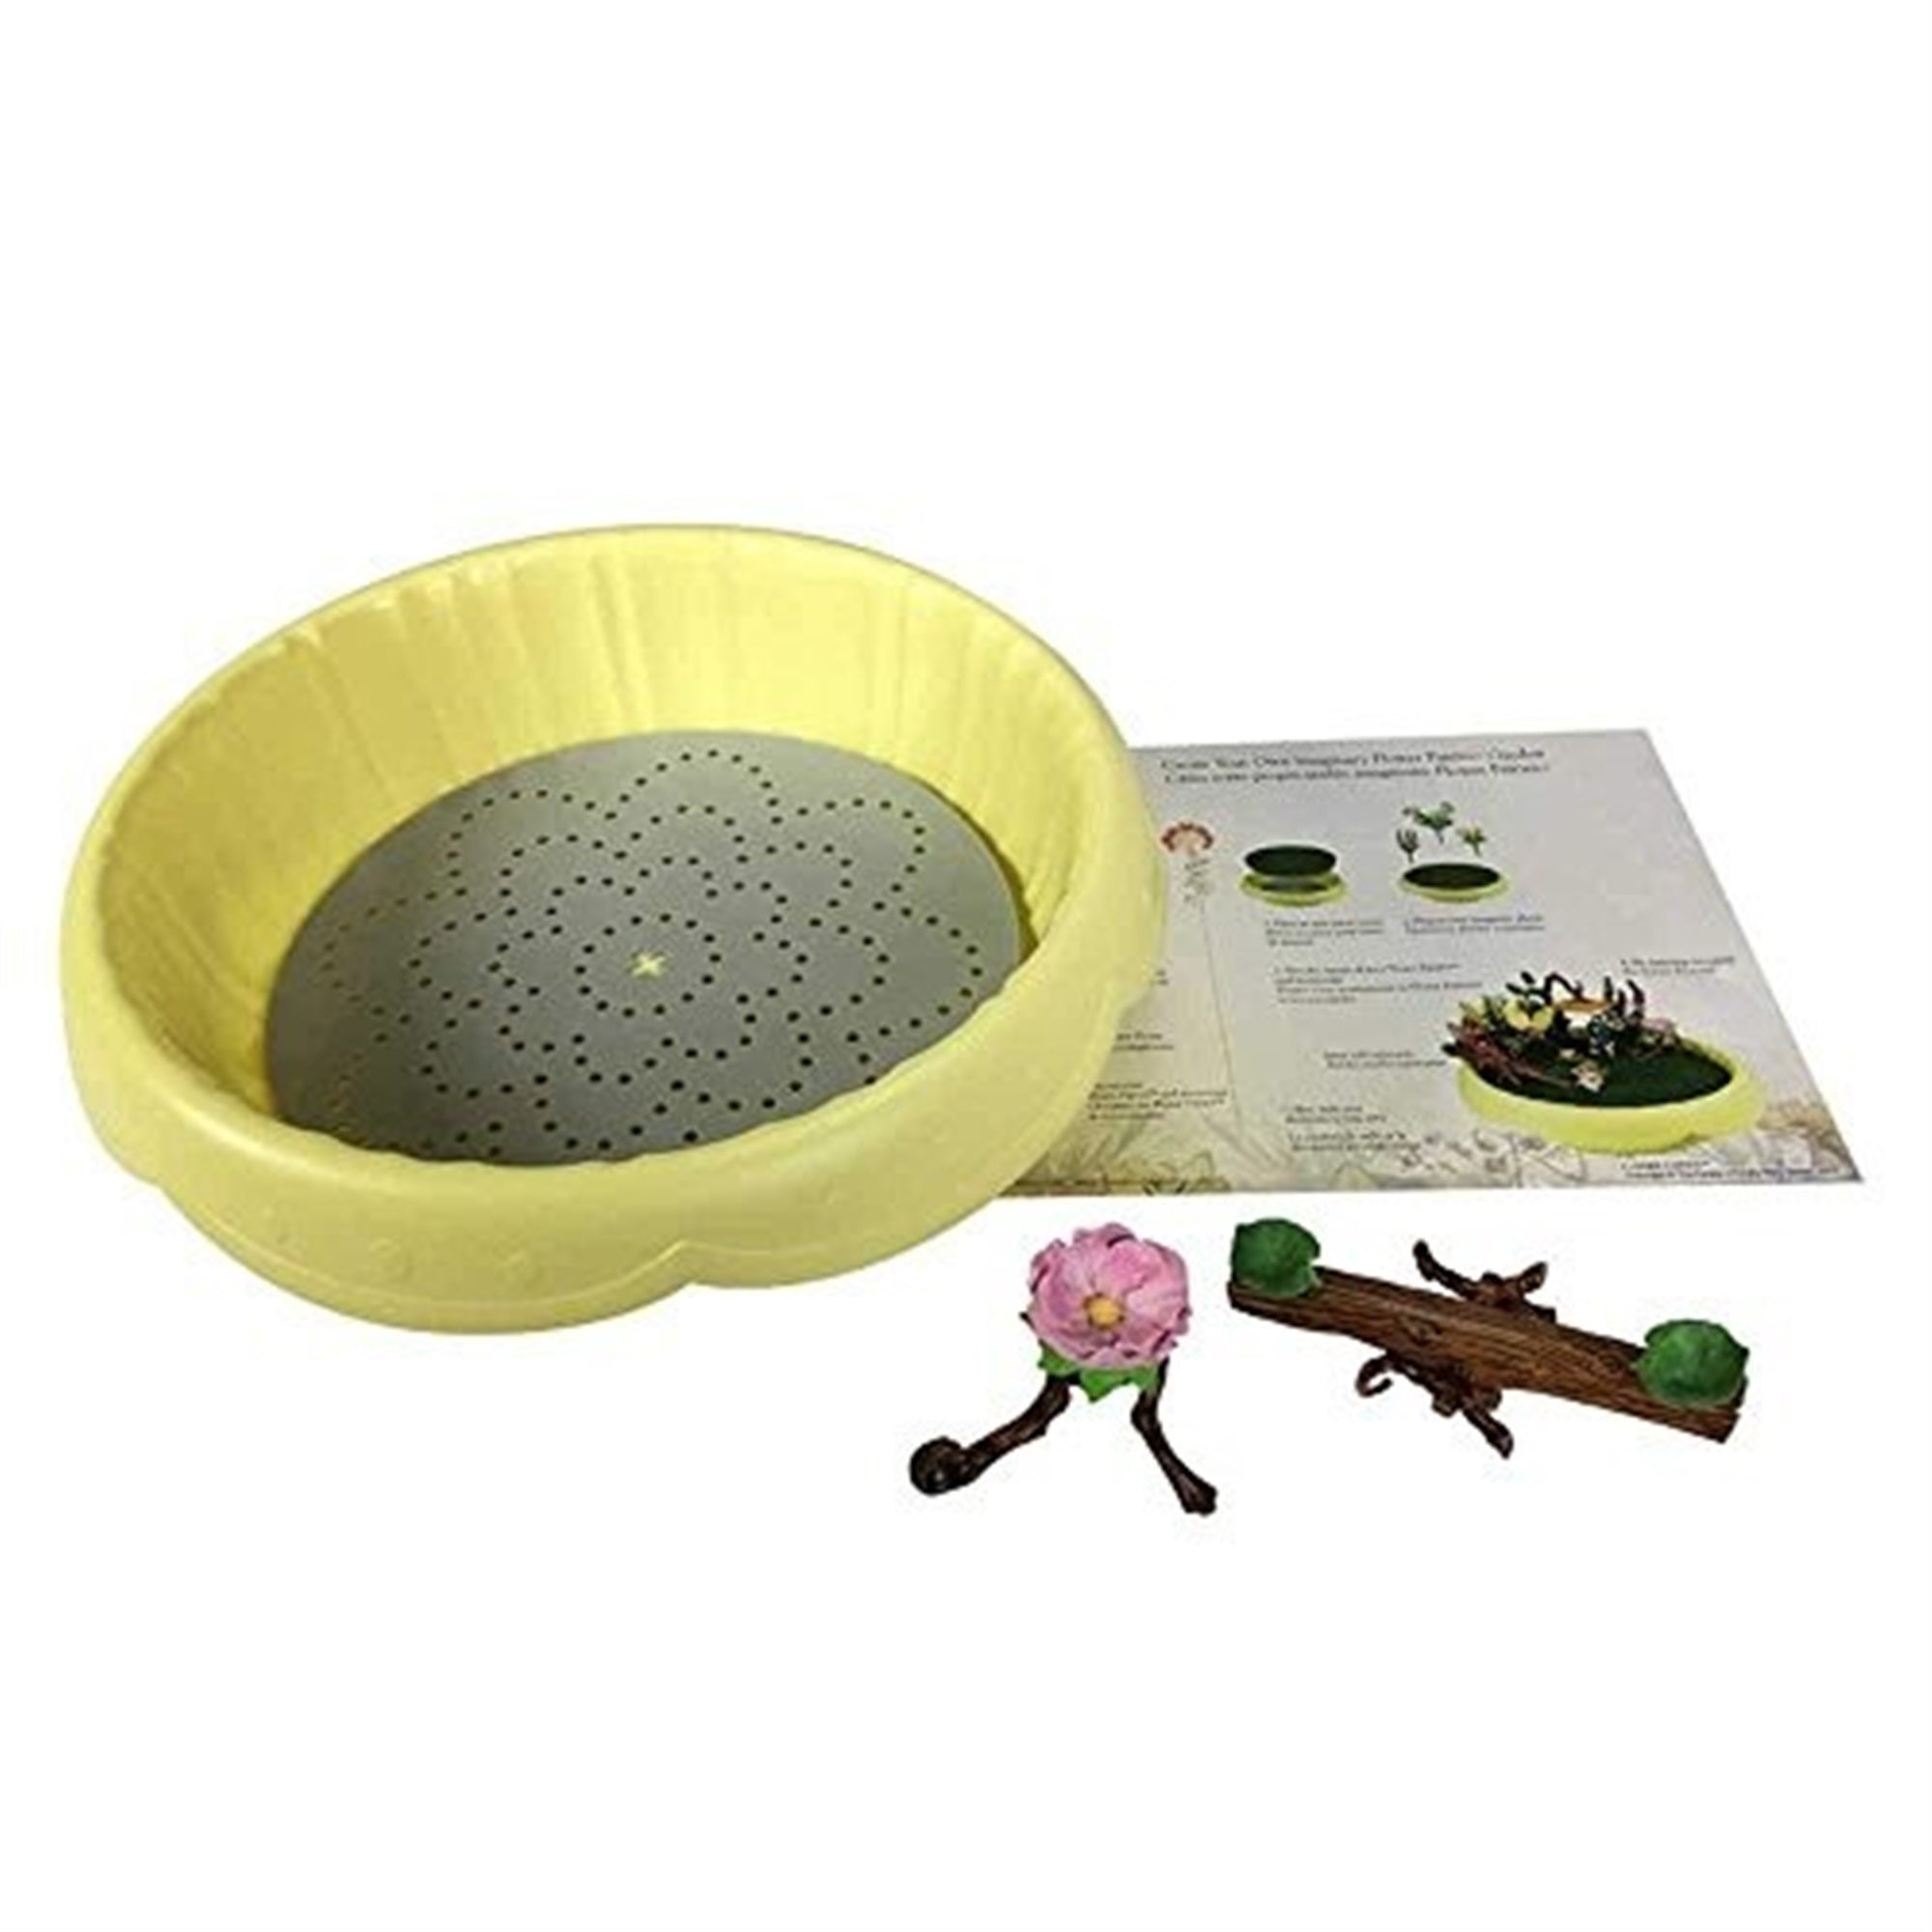 Flower Fairies Secret Garden Planter Kit with Teeter Totter & Birdbath